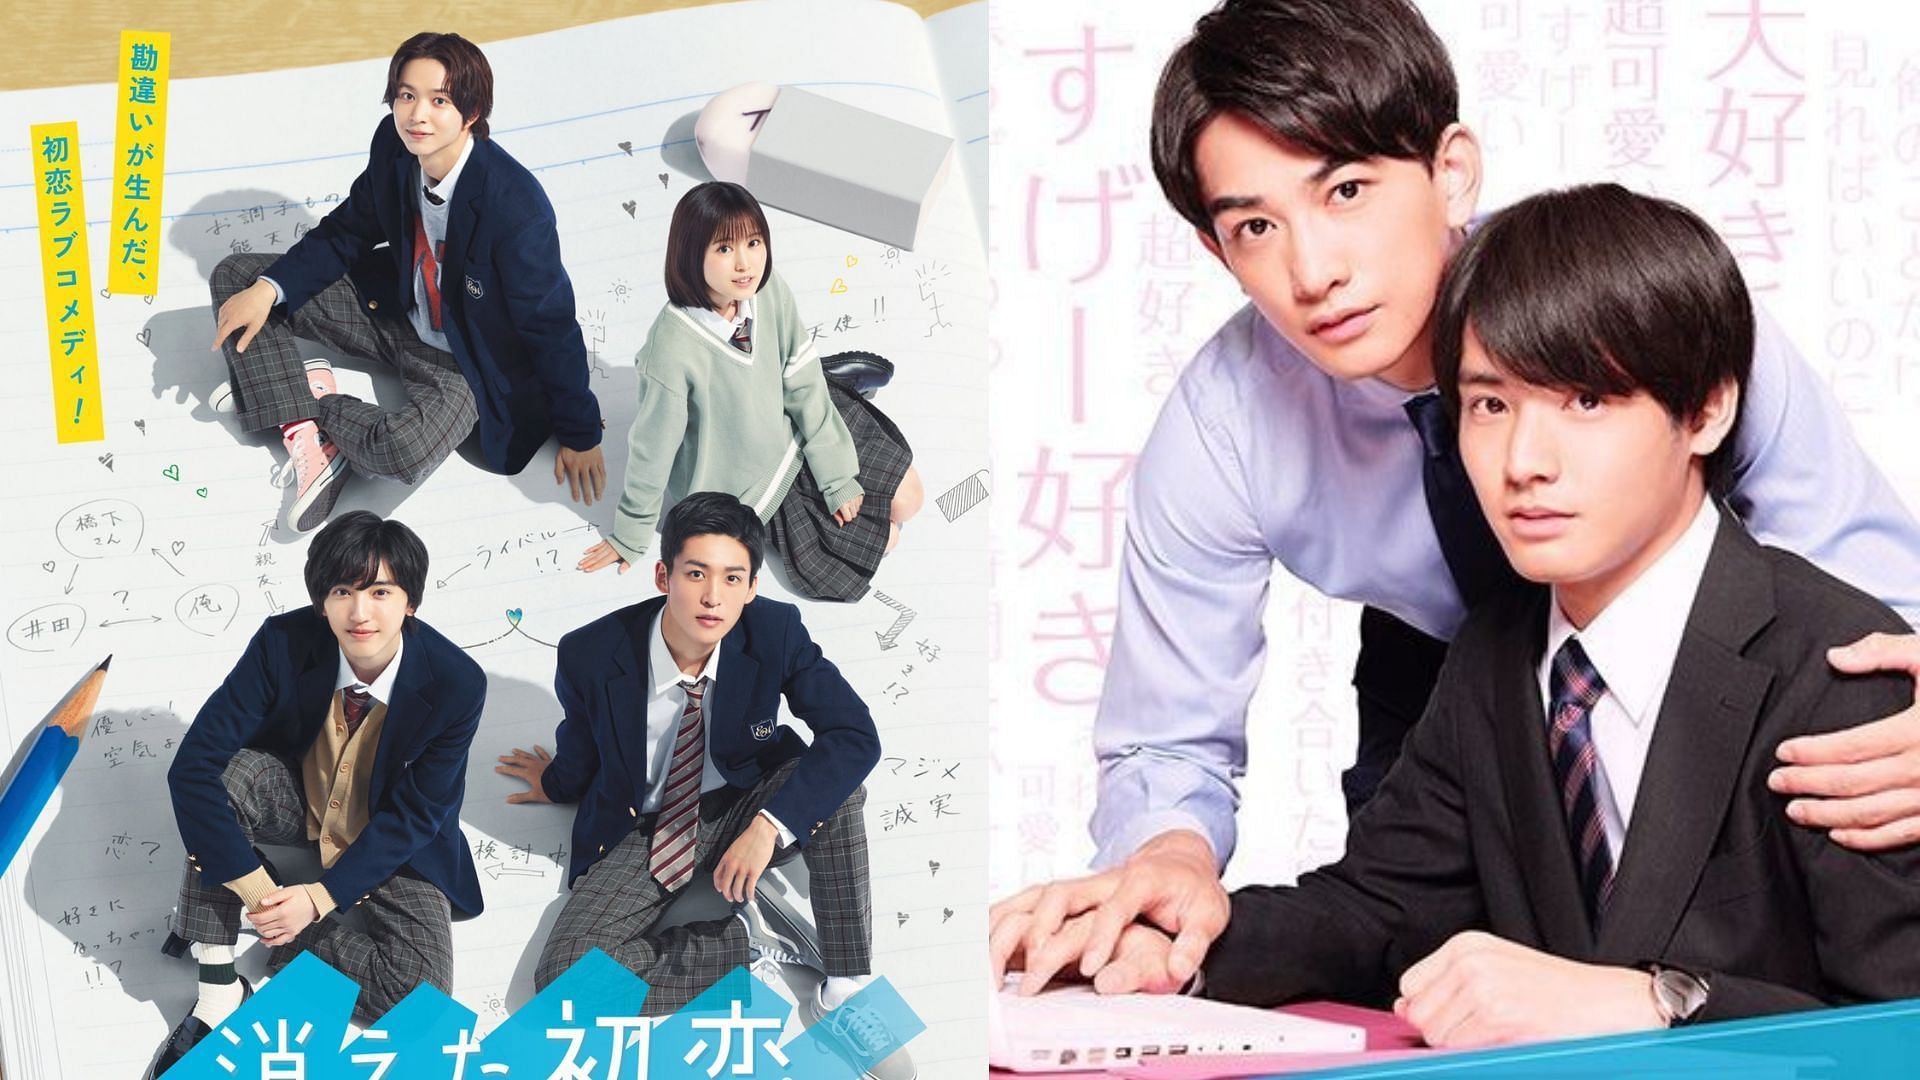 5 mustwatch romantic Japanese BL dramas